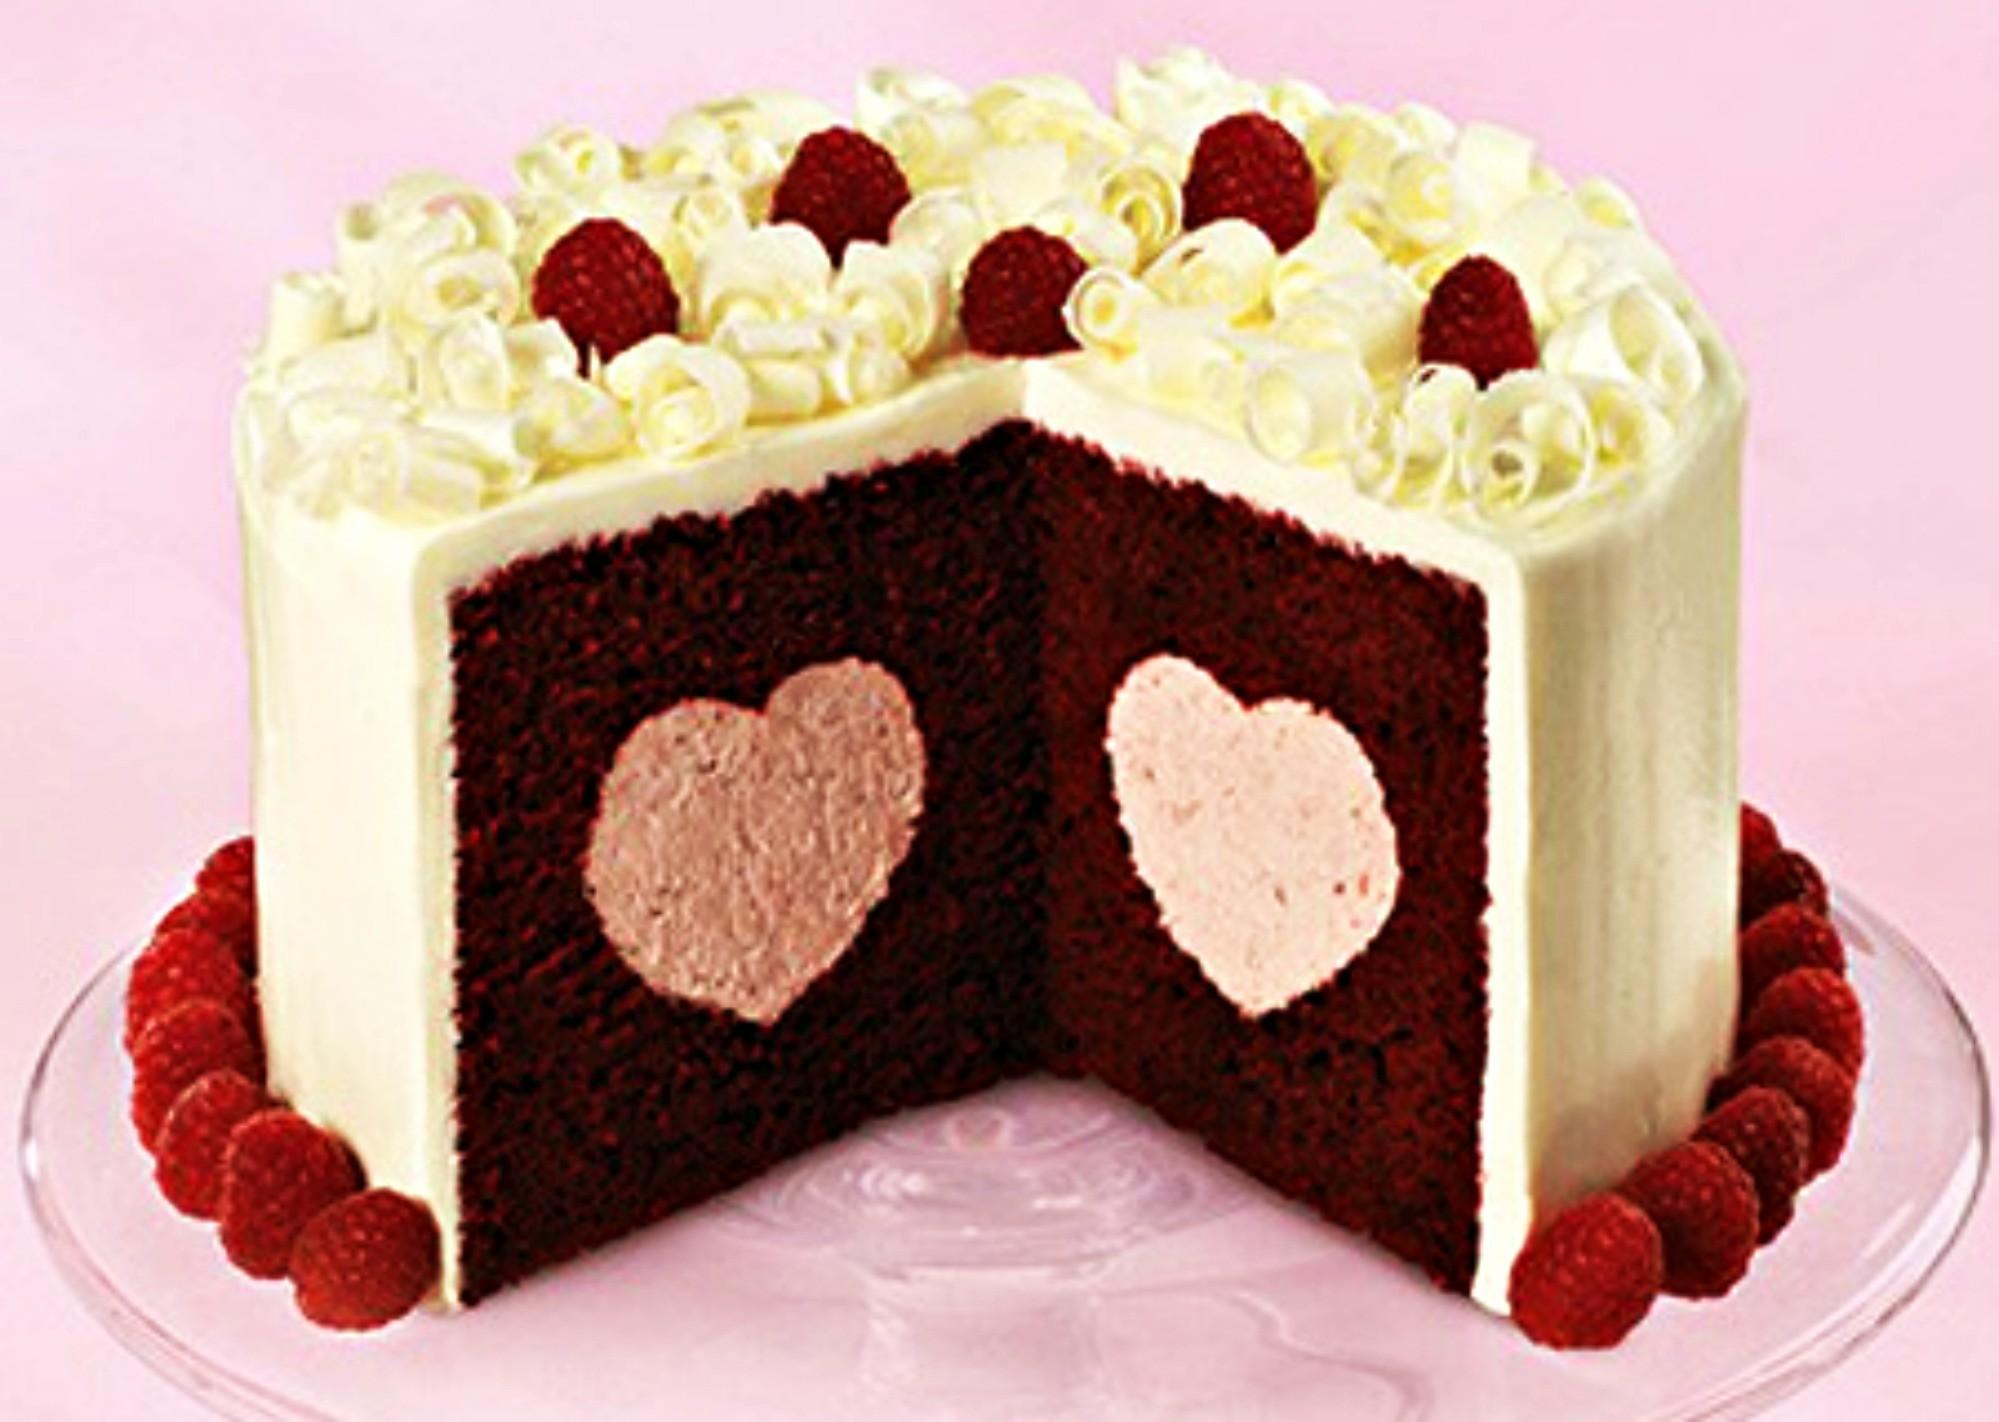 Cute heart rasberry cake wallpaper. PC